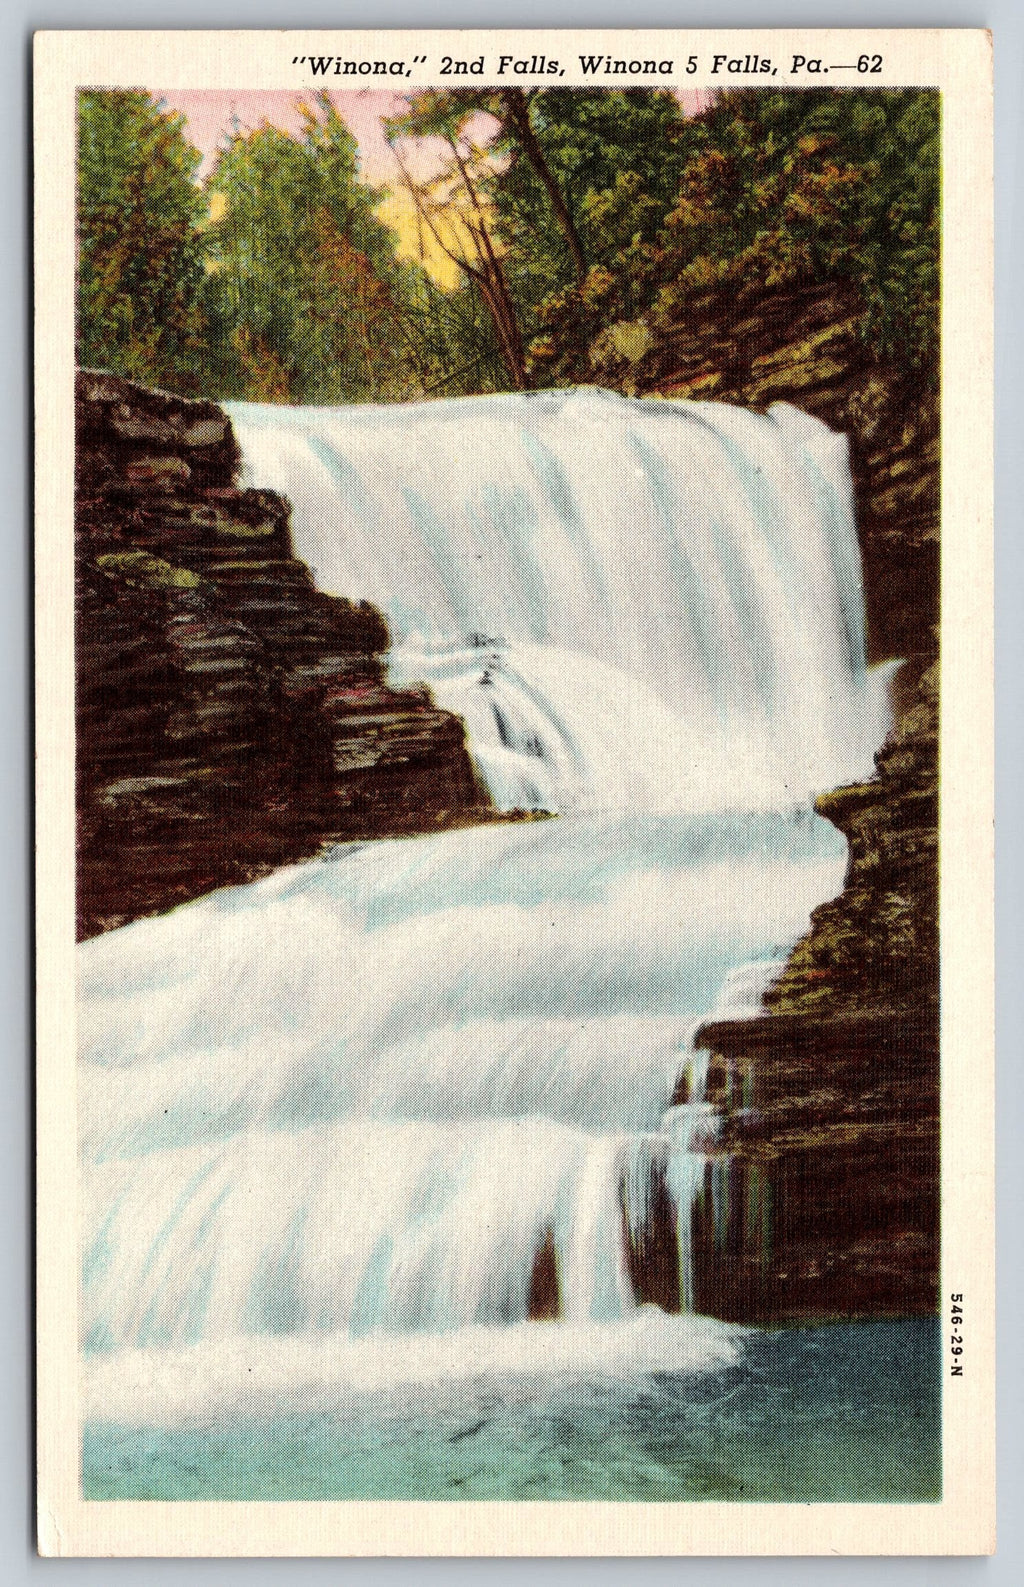 Winona 2nd Falls, Winona 5 Falls, Pennsylvania, USA, Vintage Post Card